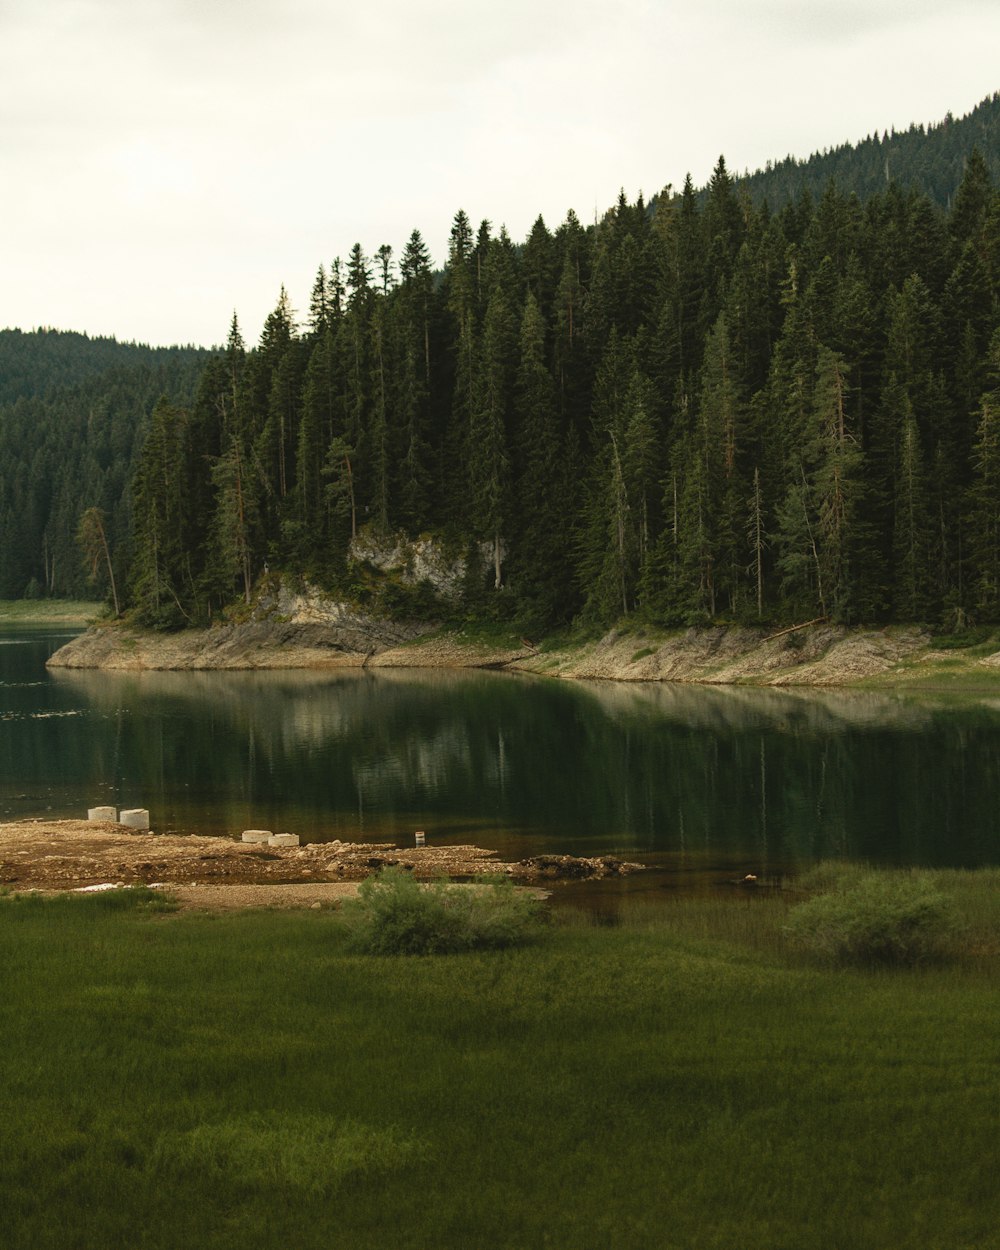 photo of pine trees and lake